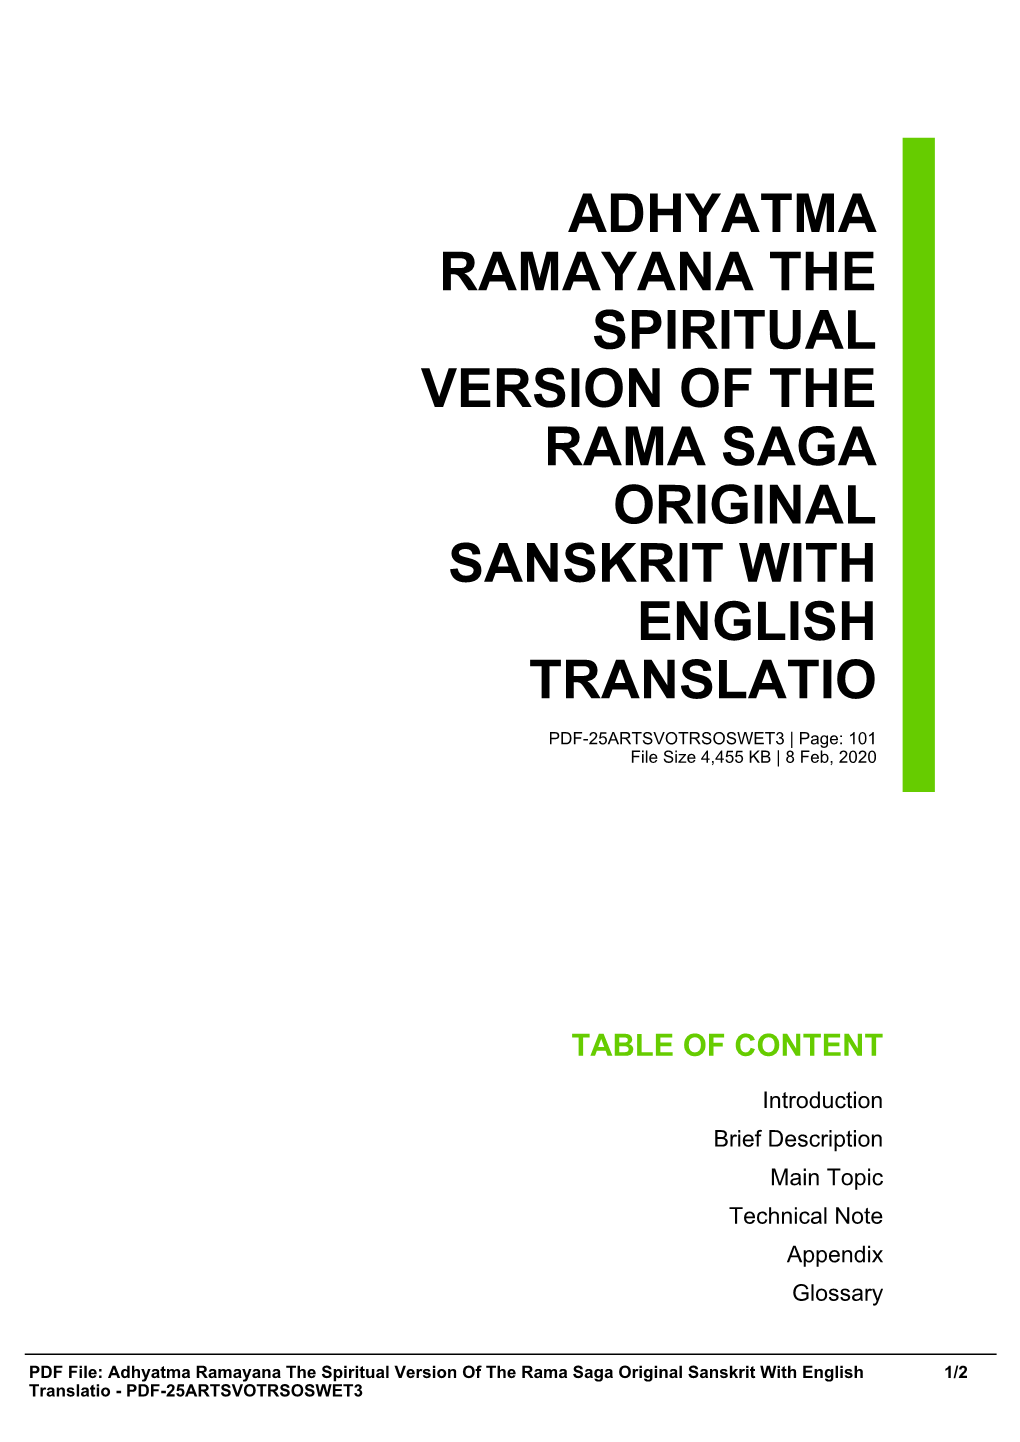 Adhyatma Ramayana the Spiritual Version of the Rama Saga Original Sanskrit with English Translatio